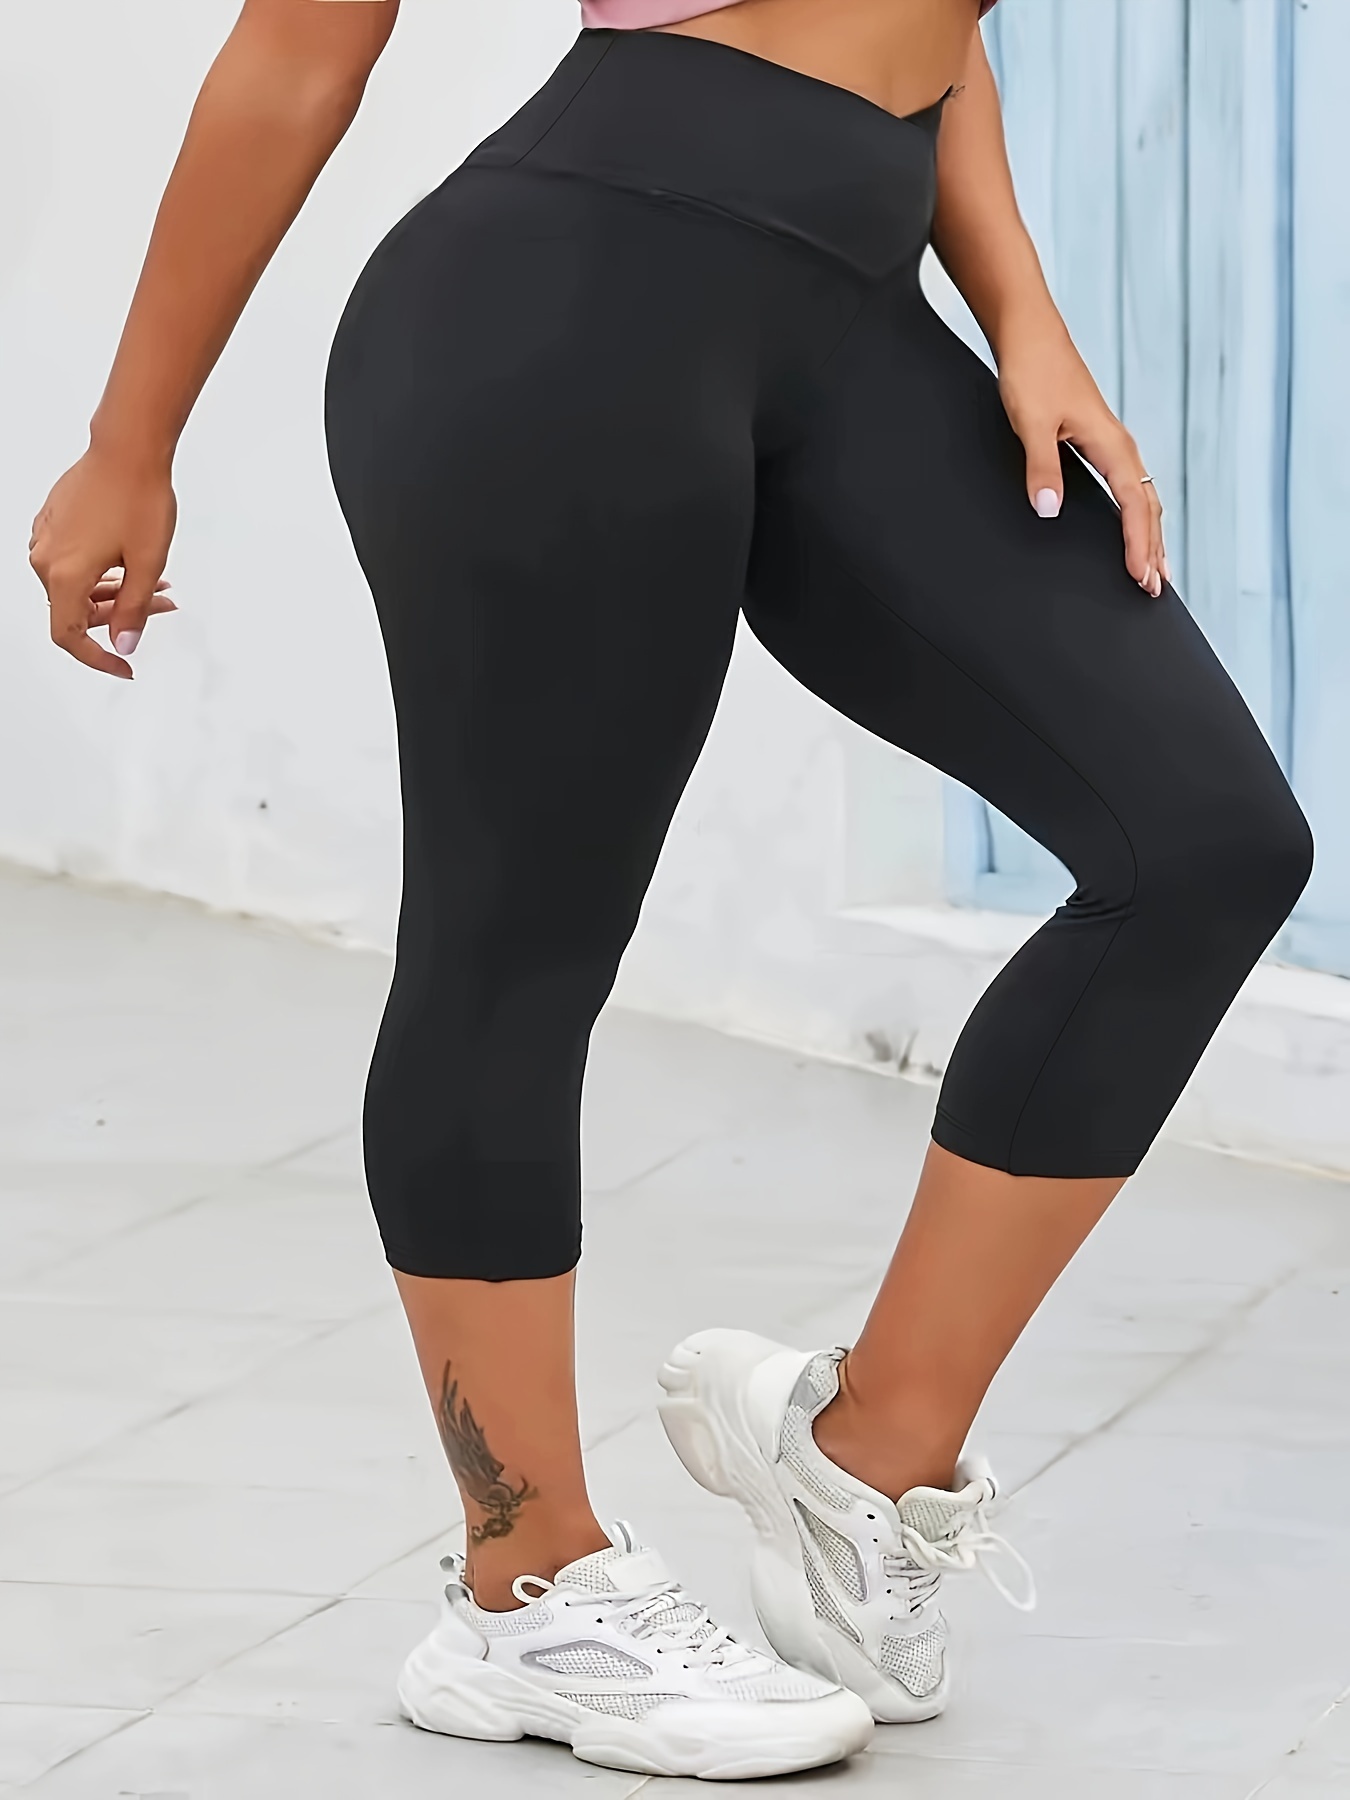 Plus Size Capri Leggings for Women Yoga Bottom Capris Pants High Waisted  Cutout Hem Solid Color Compression Shorts (Medium, Black)